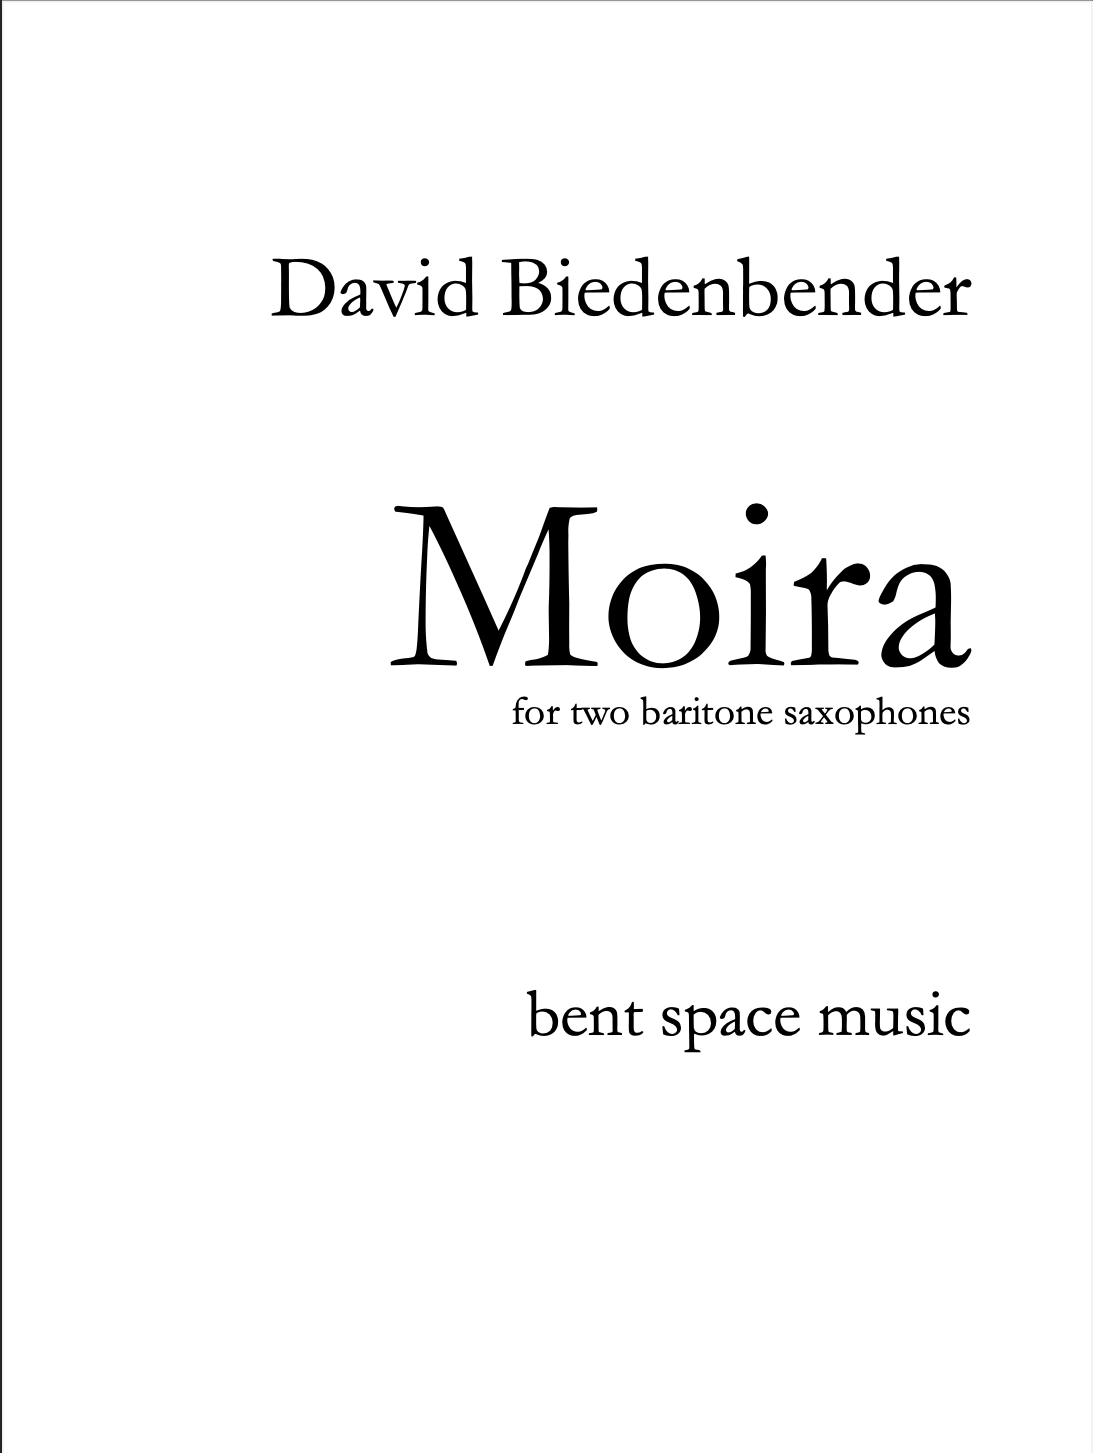 Moira by David Biedenbender